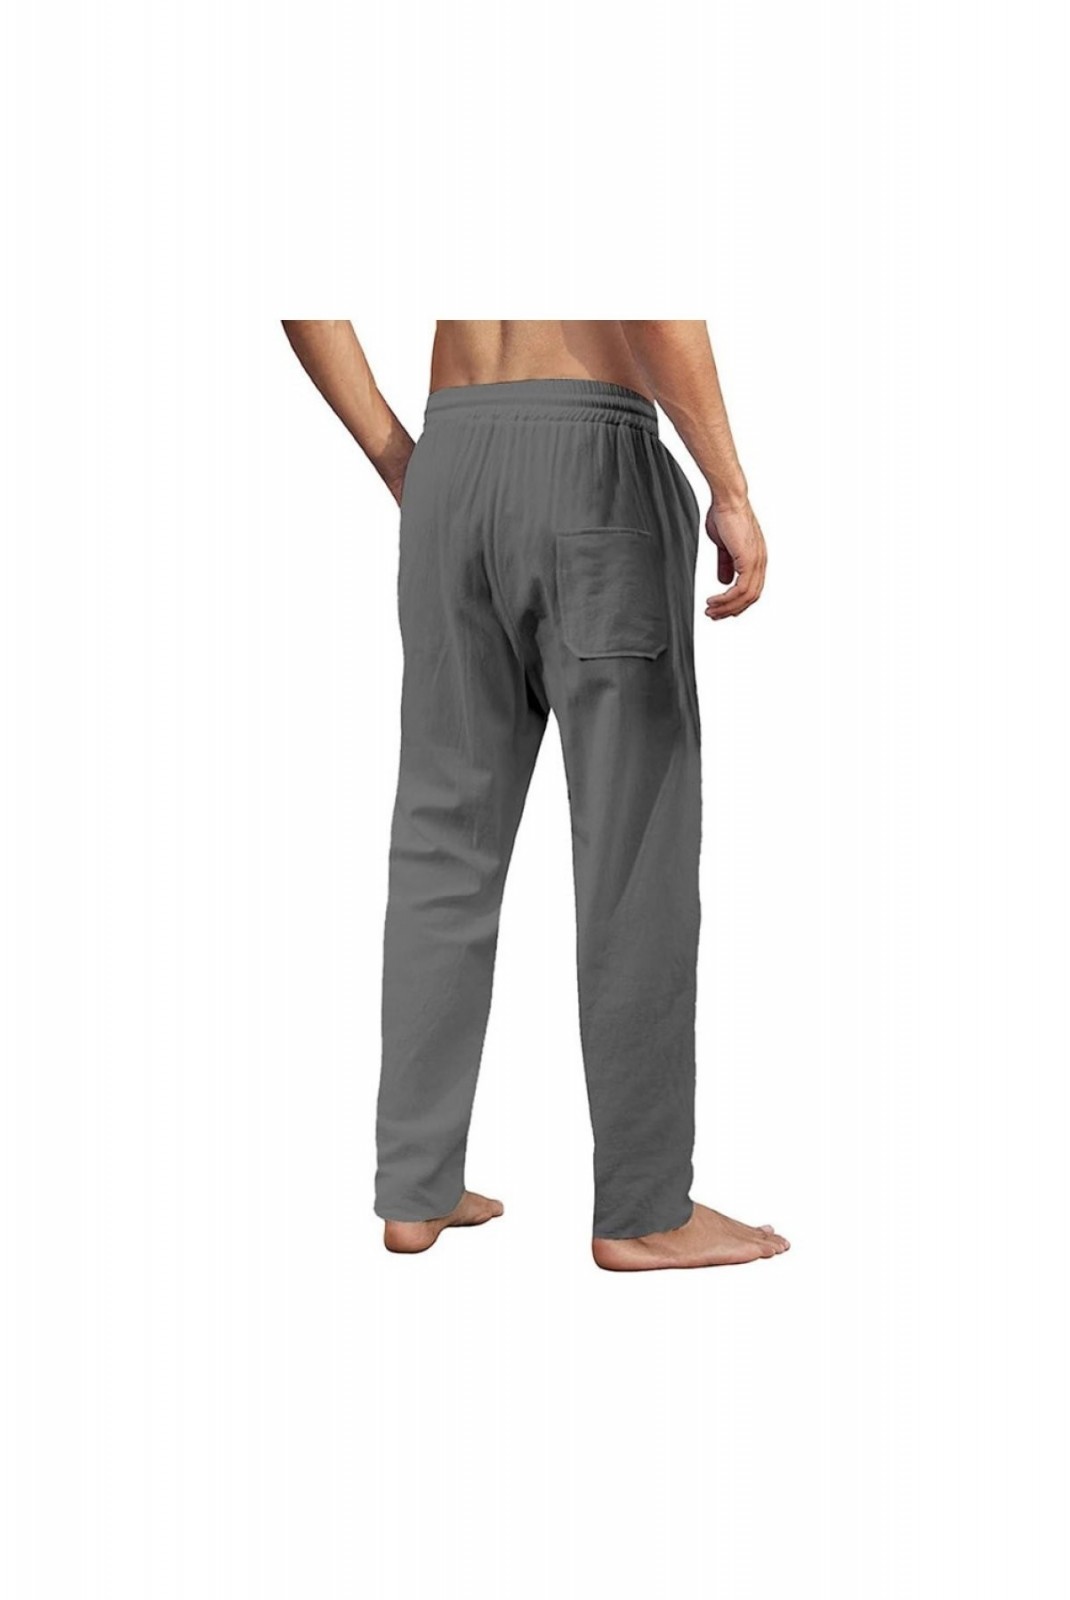 Pantalon 100%coton Delie GREY C154